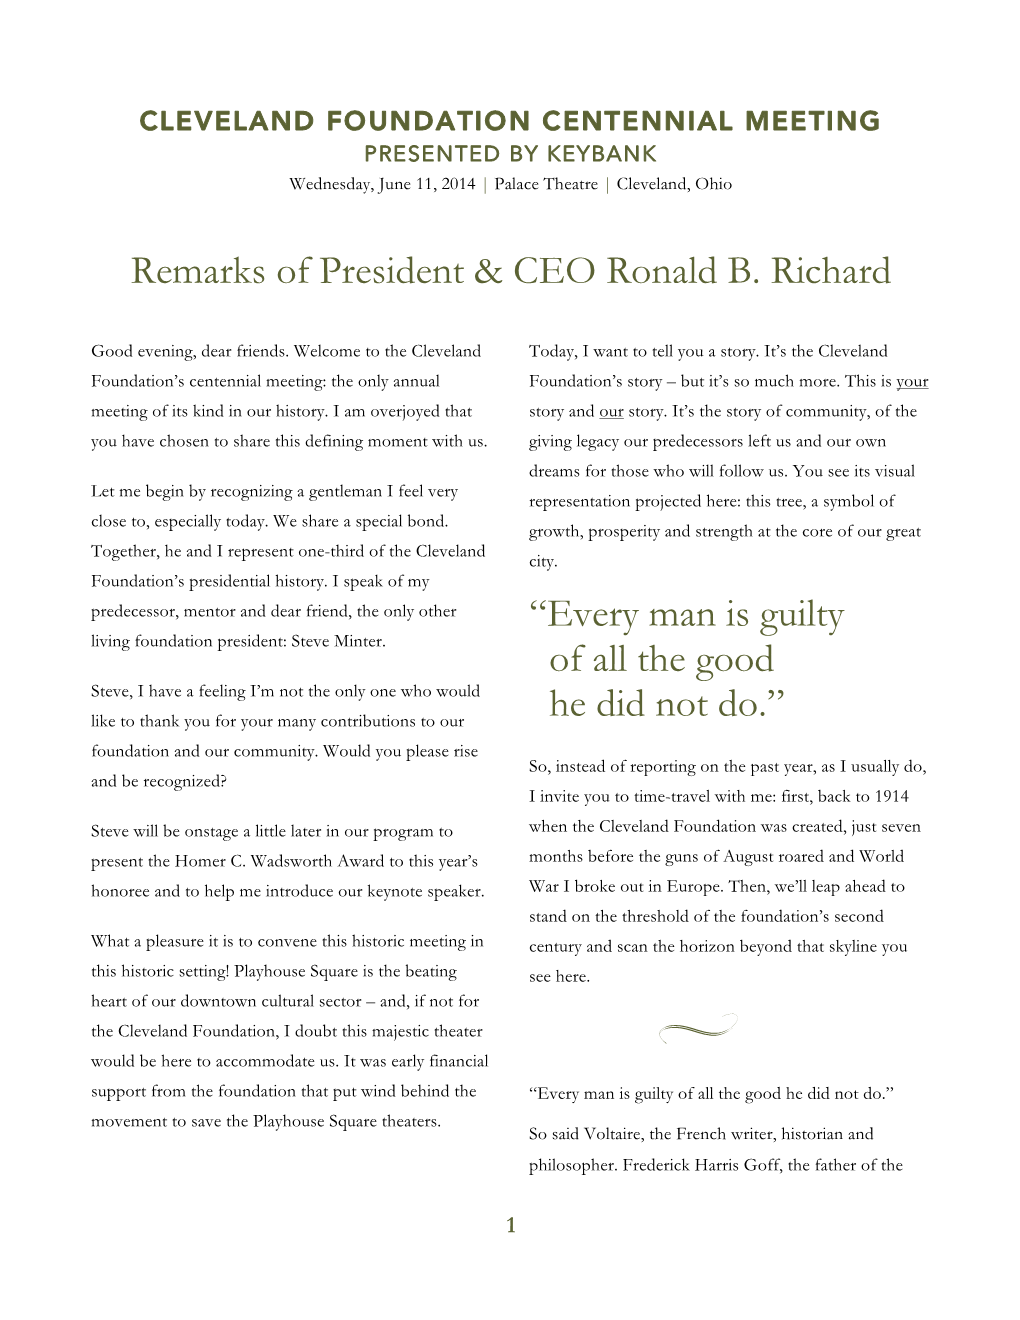 Remarks of President & CEO Ronald B. Richard